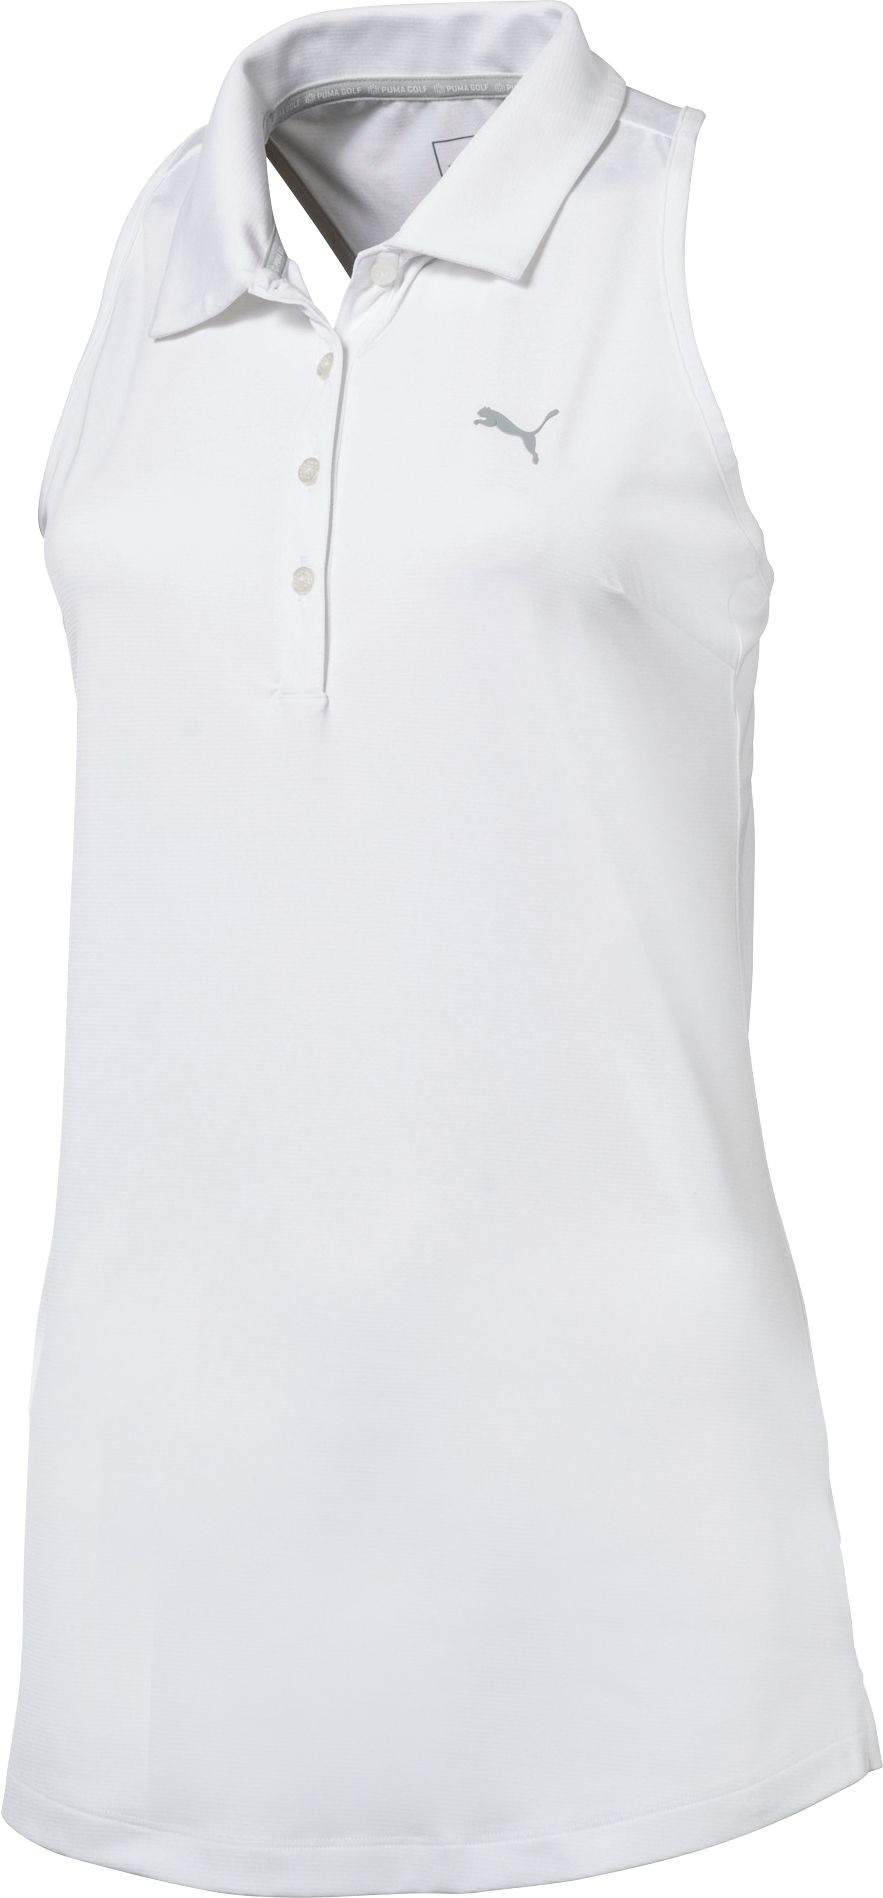 Women's Golf Shirts | Golf Galaxy